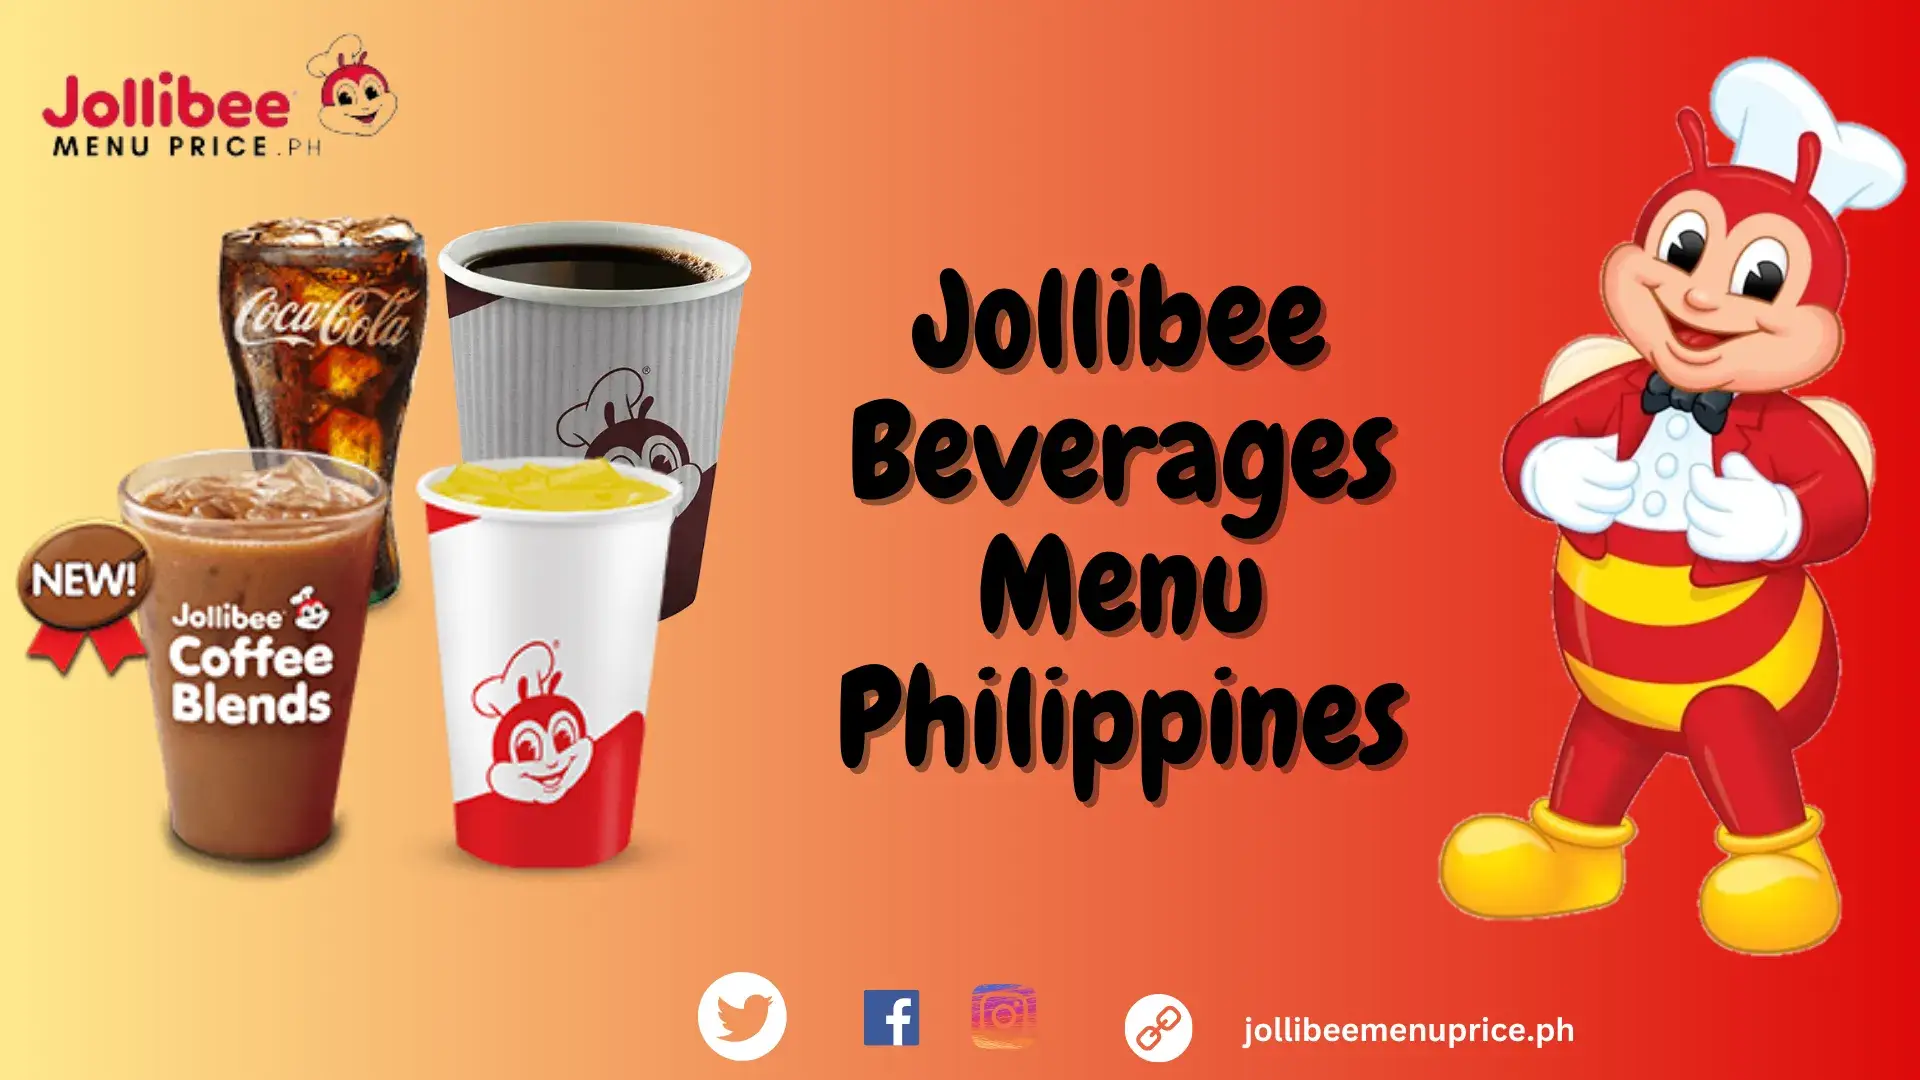 Jollibee beverages menu